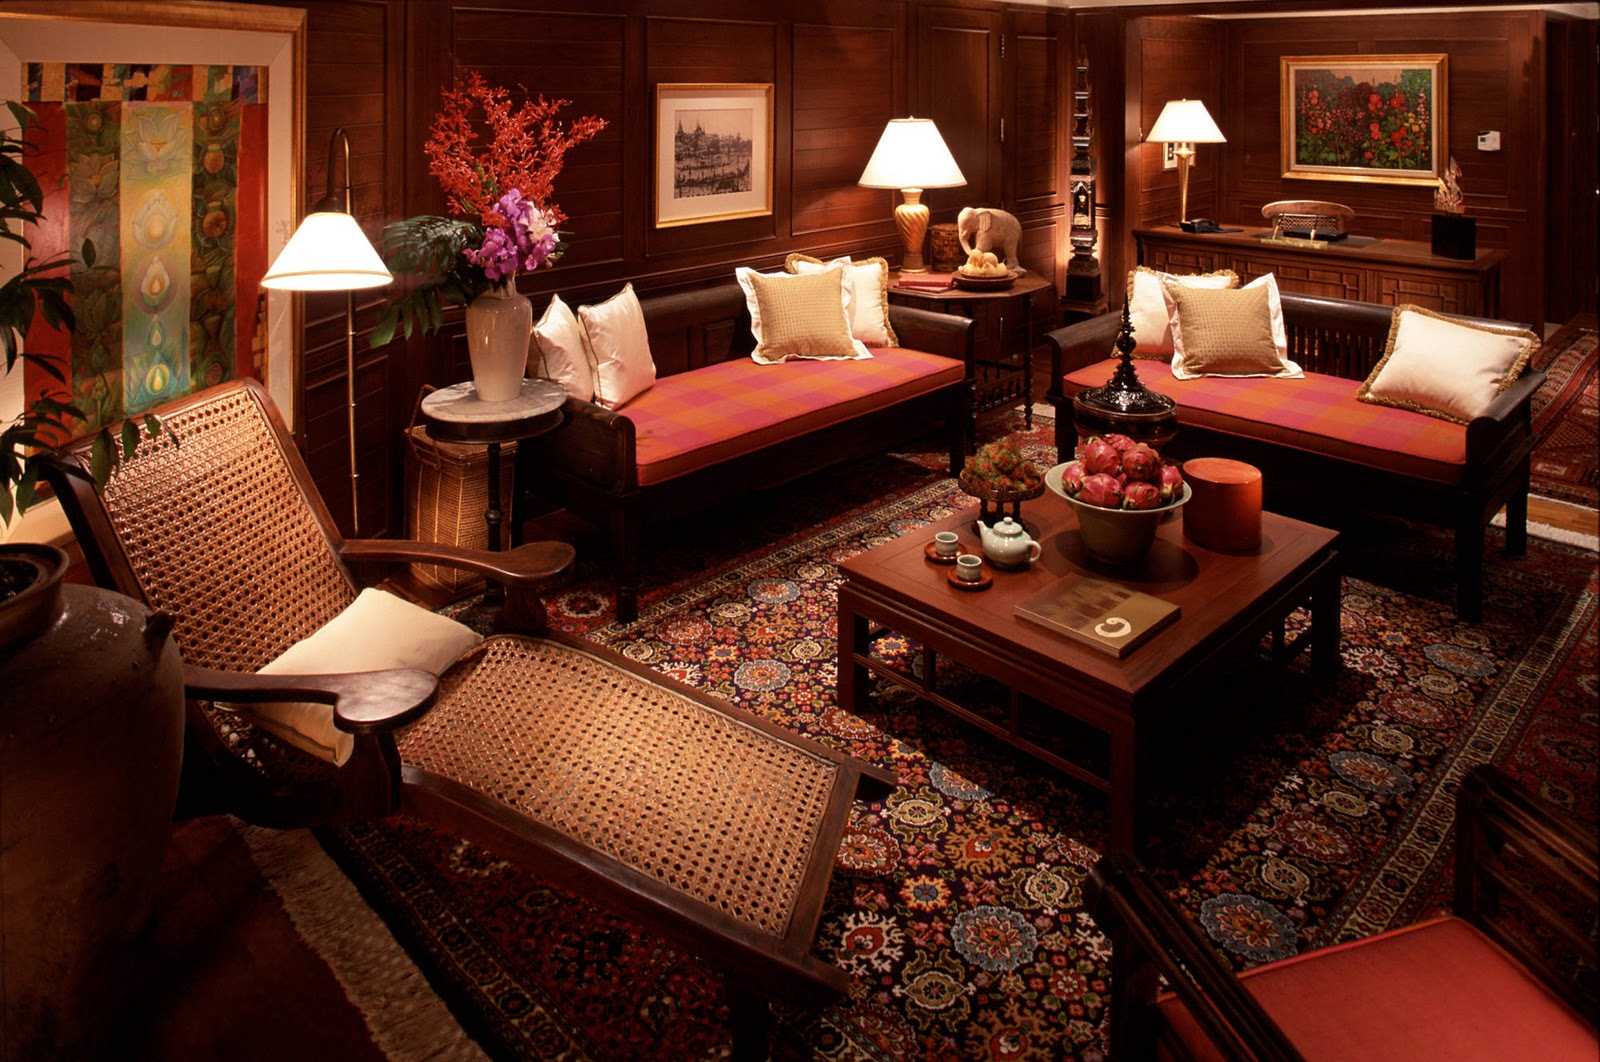 beautiful bedroom interior in oriental style